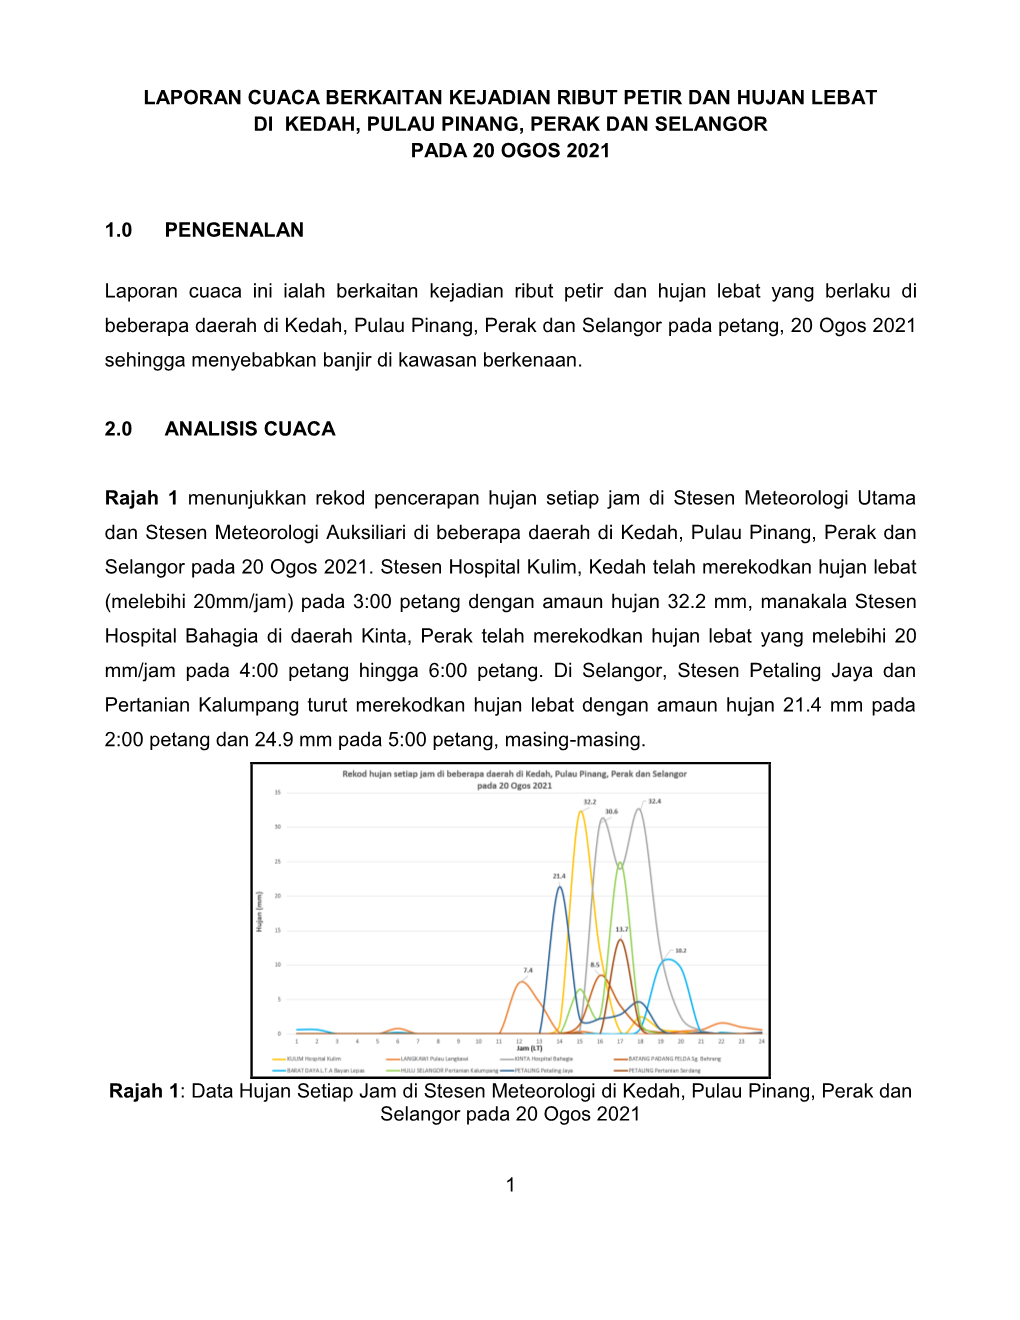 Laporan Cuaca Berkaitan Kejadian Ribut Petir Dan Hujan Lebat Di Kedah, Pulau Pinang, Perak Dan Selangor Pada 20 Ogos 2021